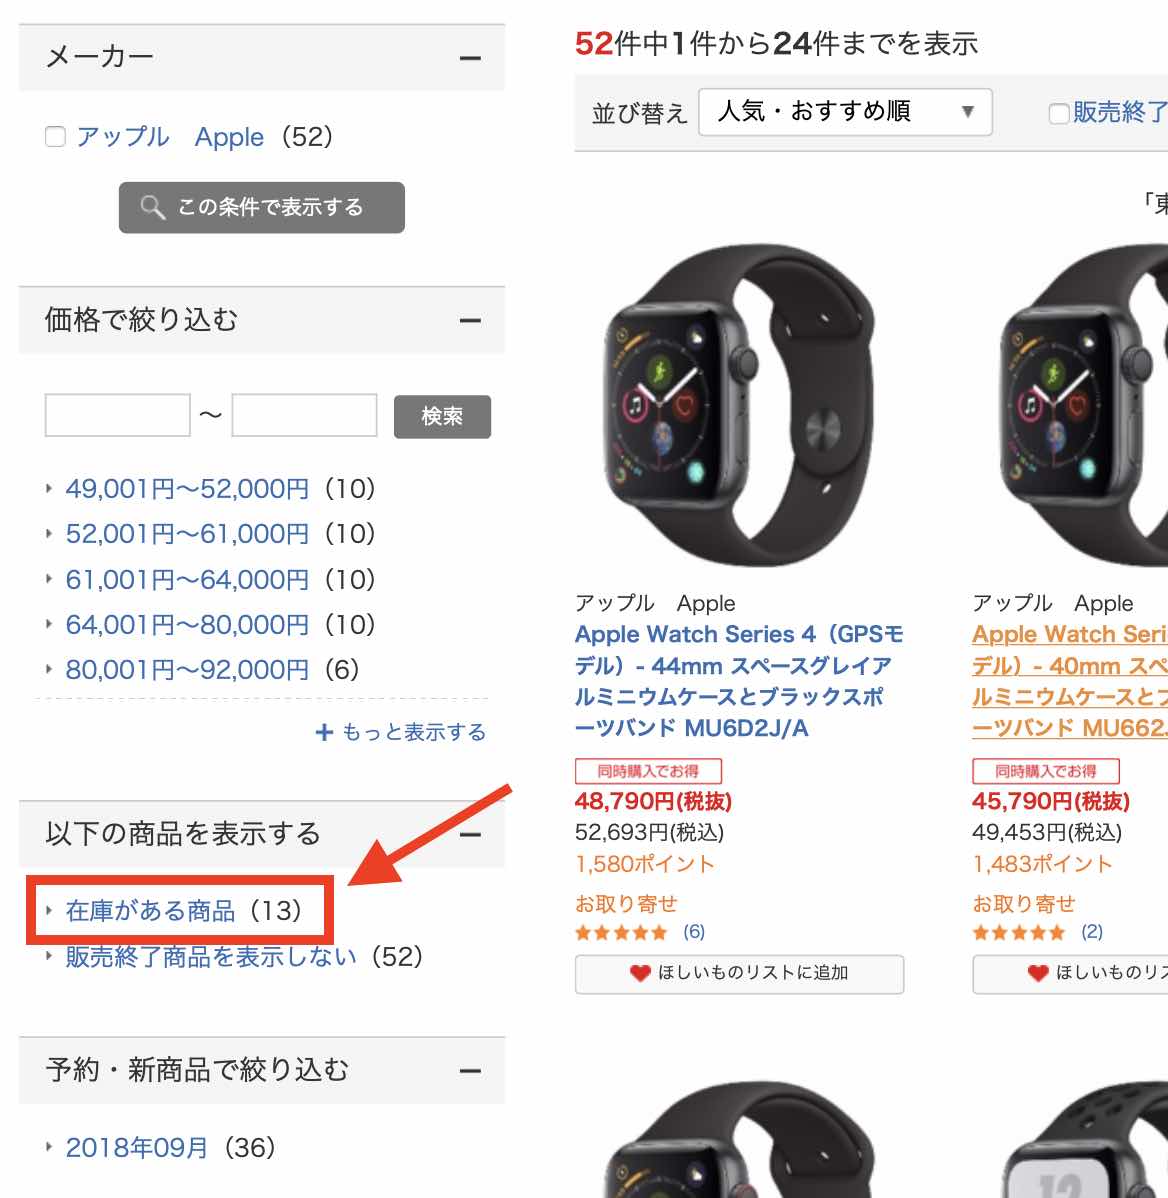 Apple Watch Series 4 stock - 3